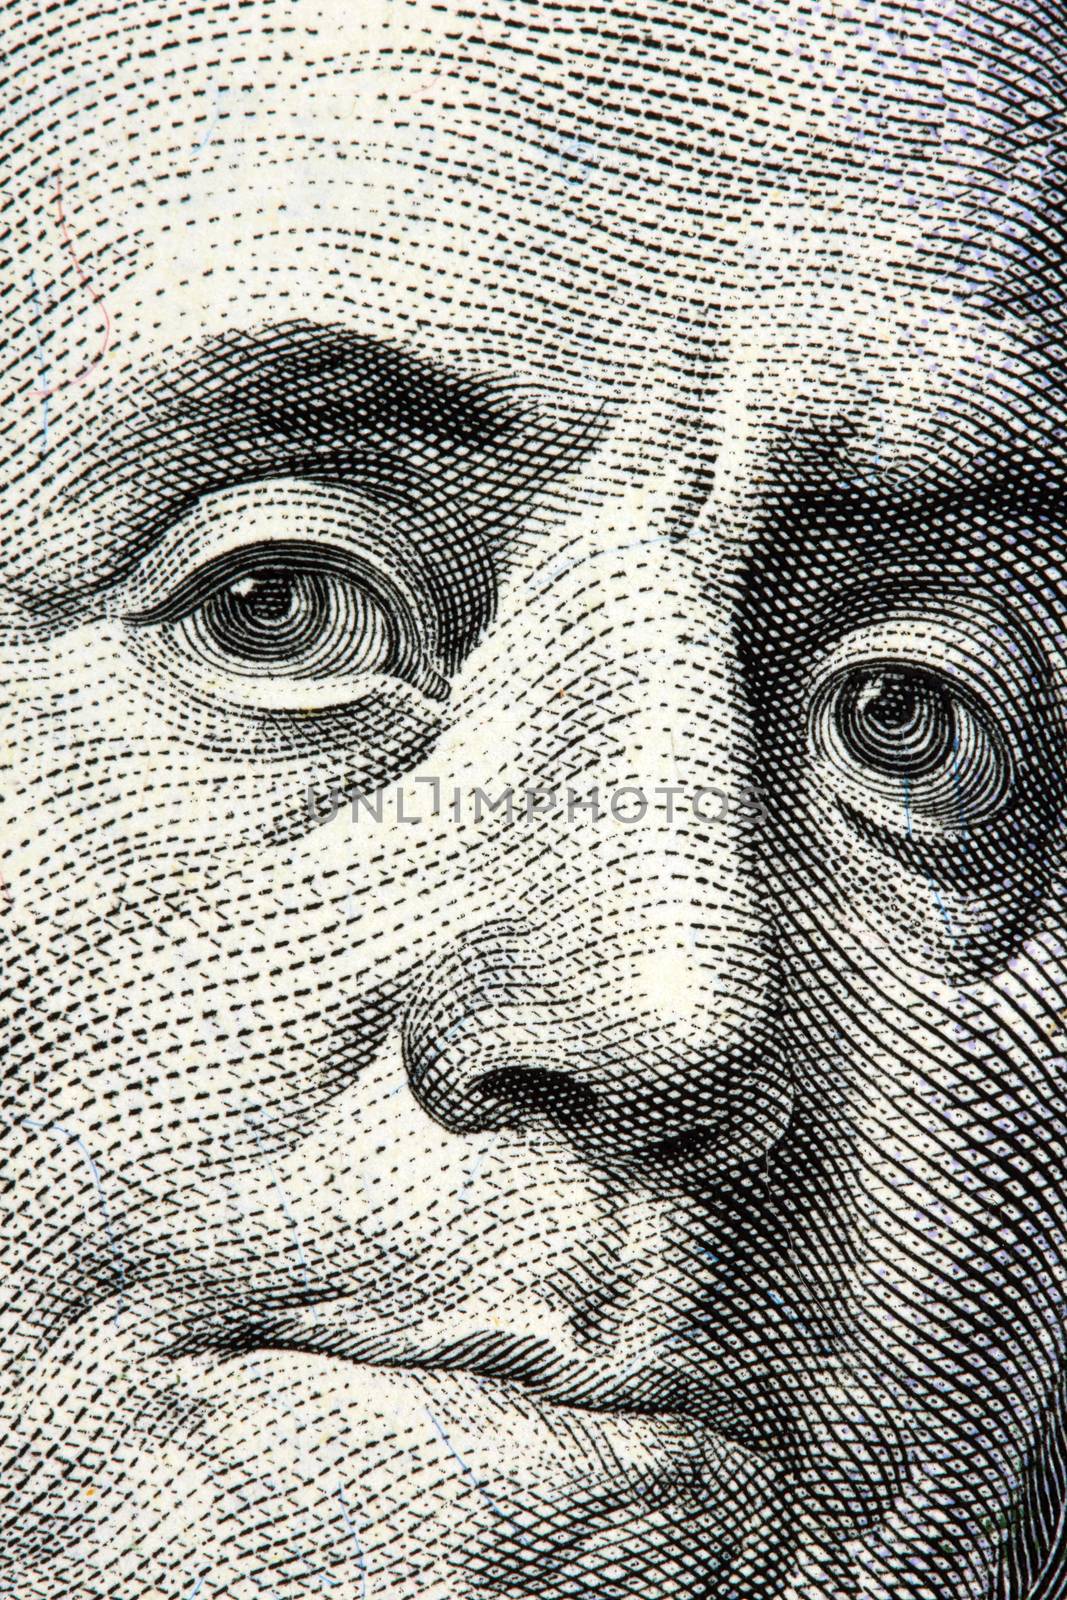 Hundred dollar bill, eye Franklin background, textures 